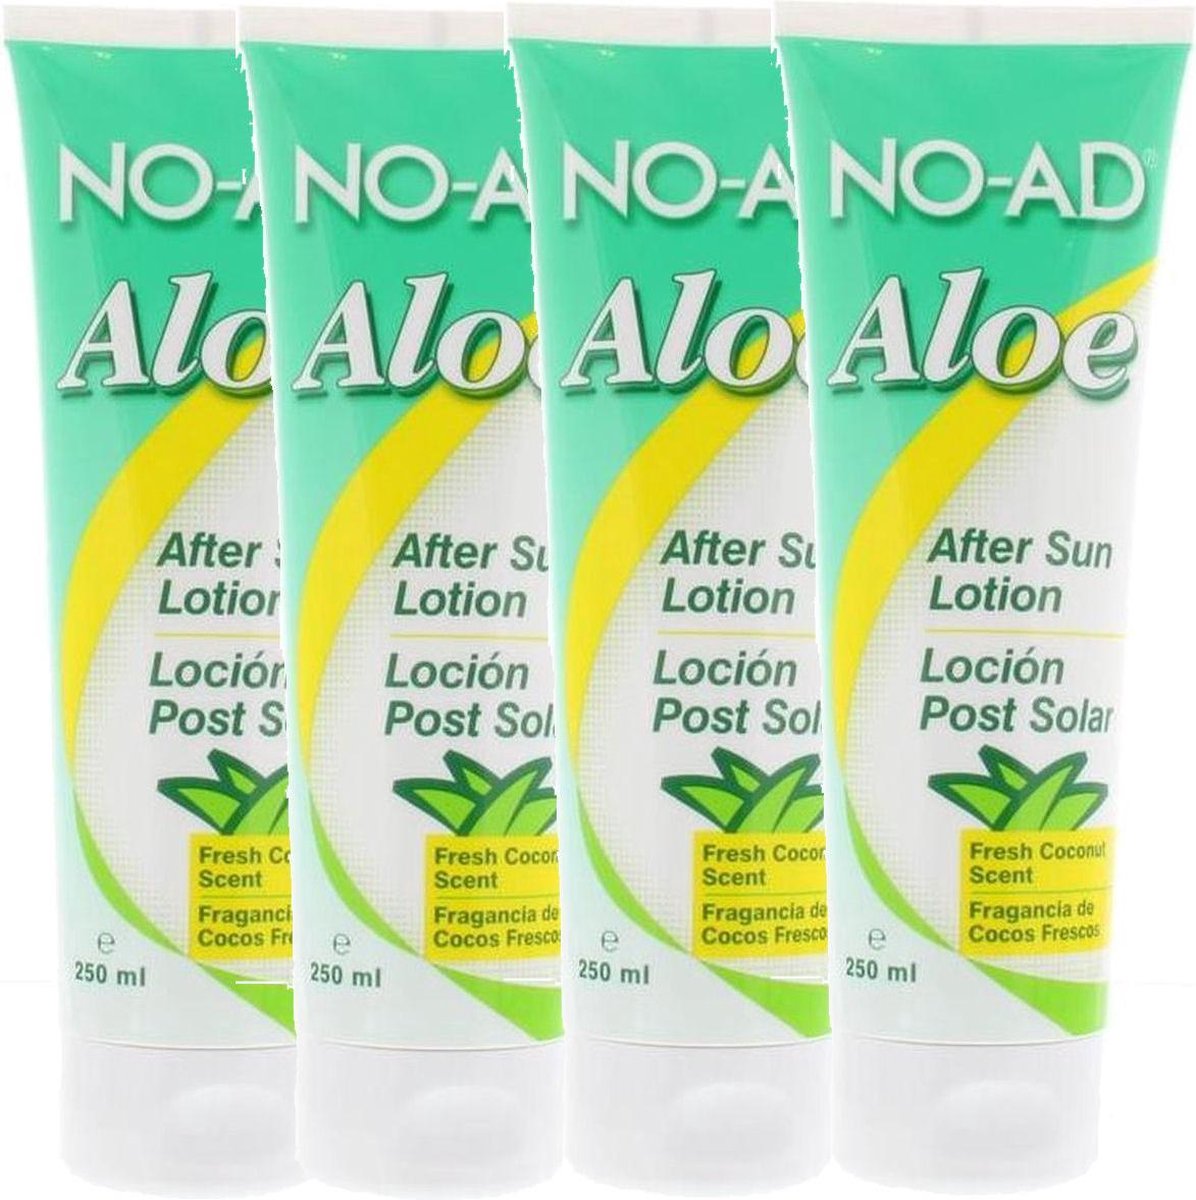 NO-AD Aloë Vera After Sun Lotion - 250 ml - 4 pak - No-Ad